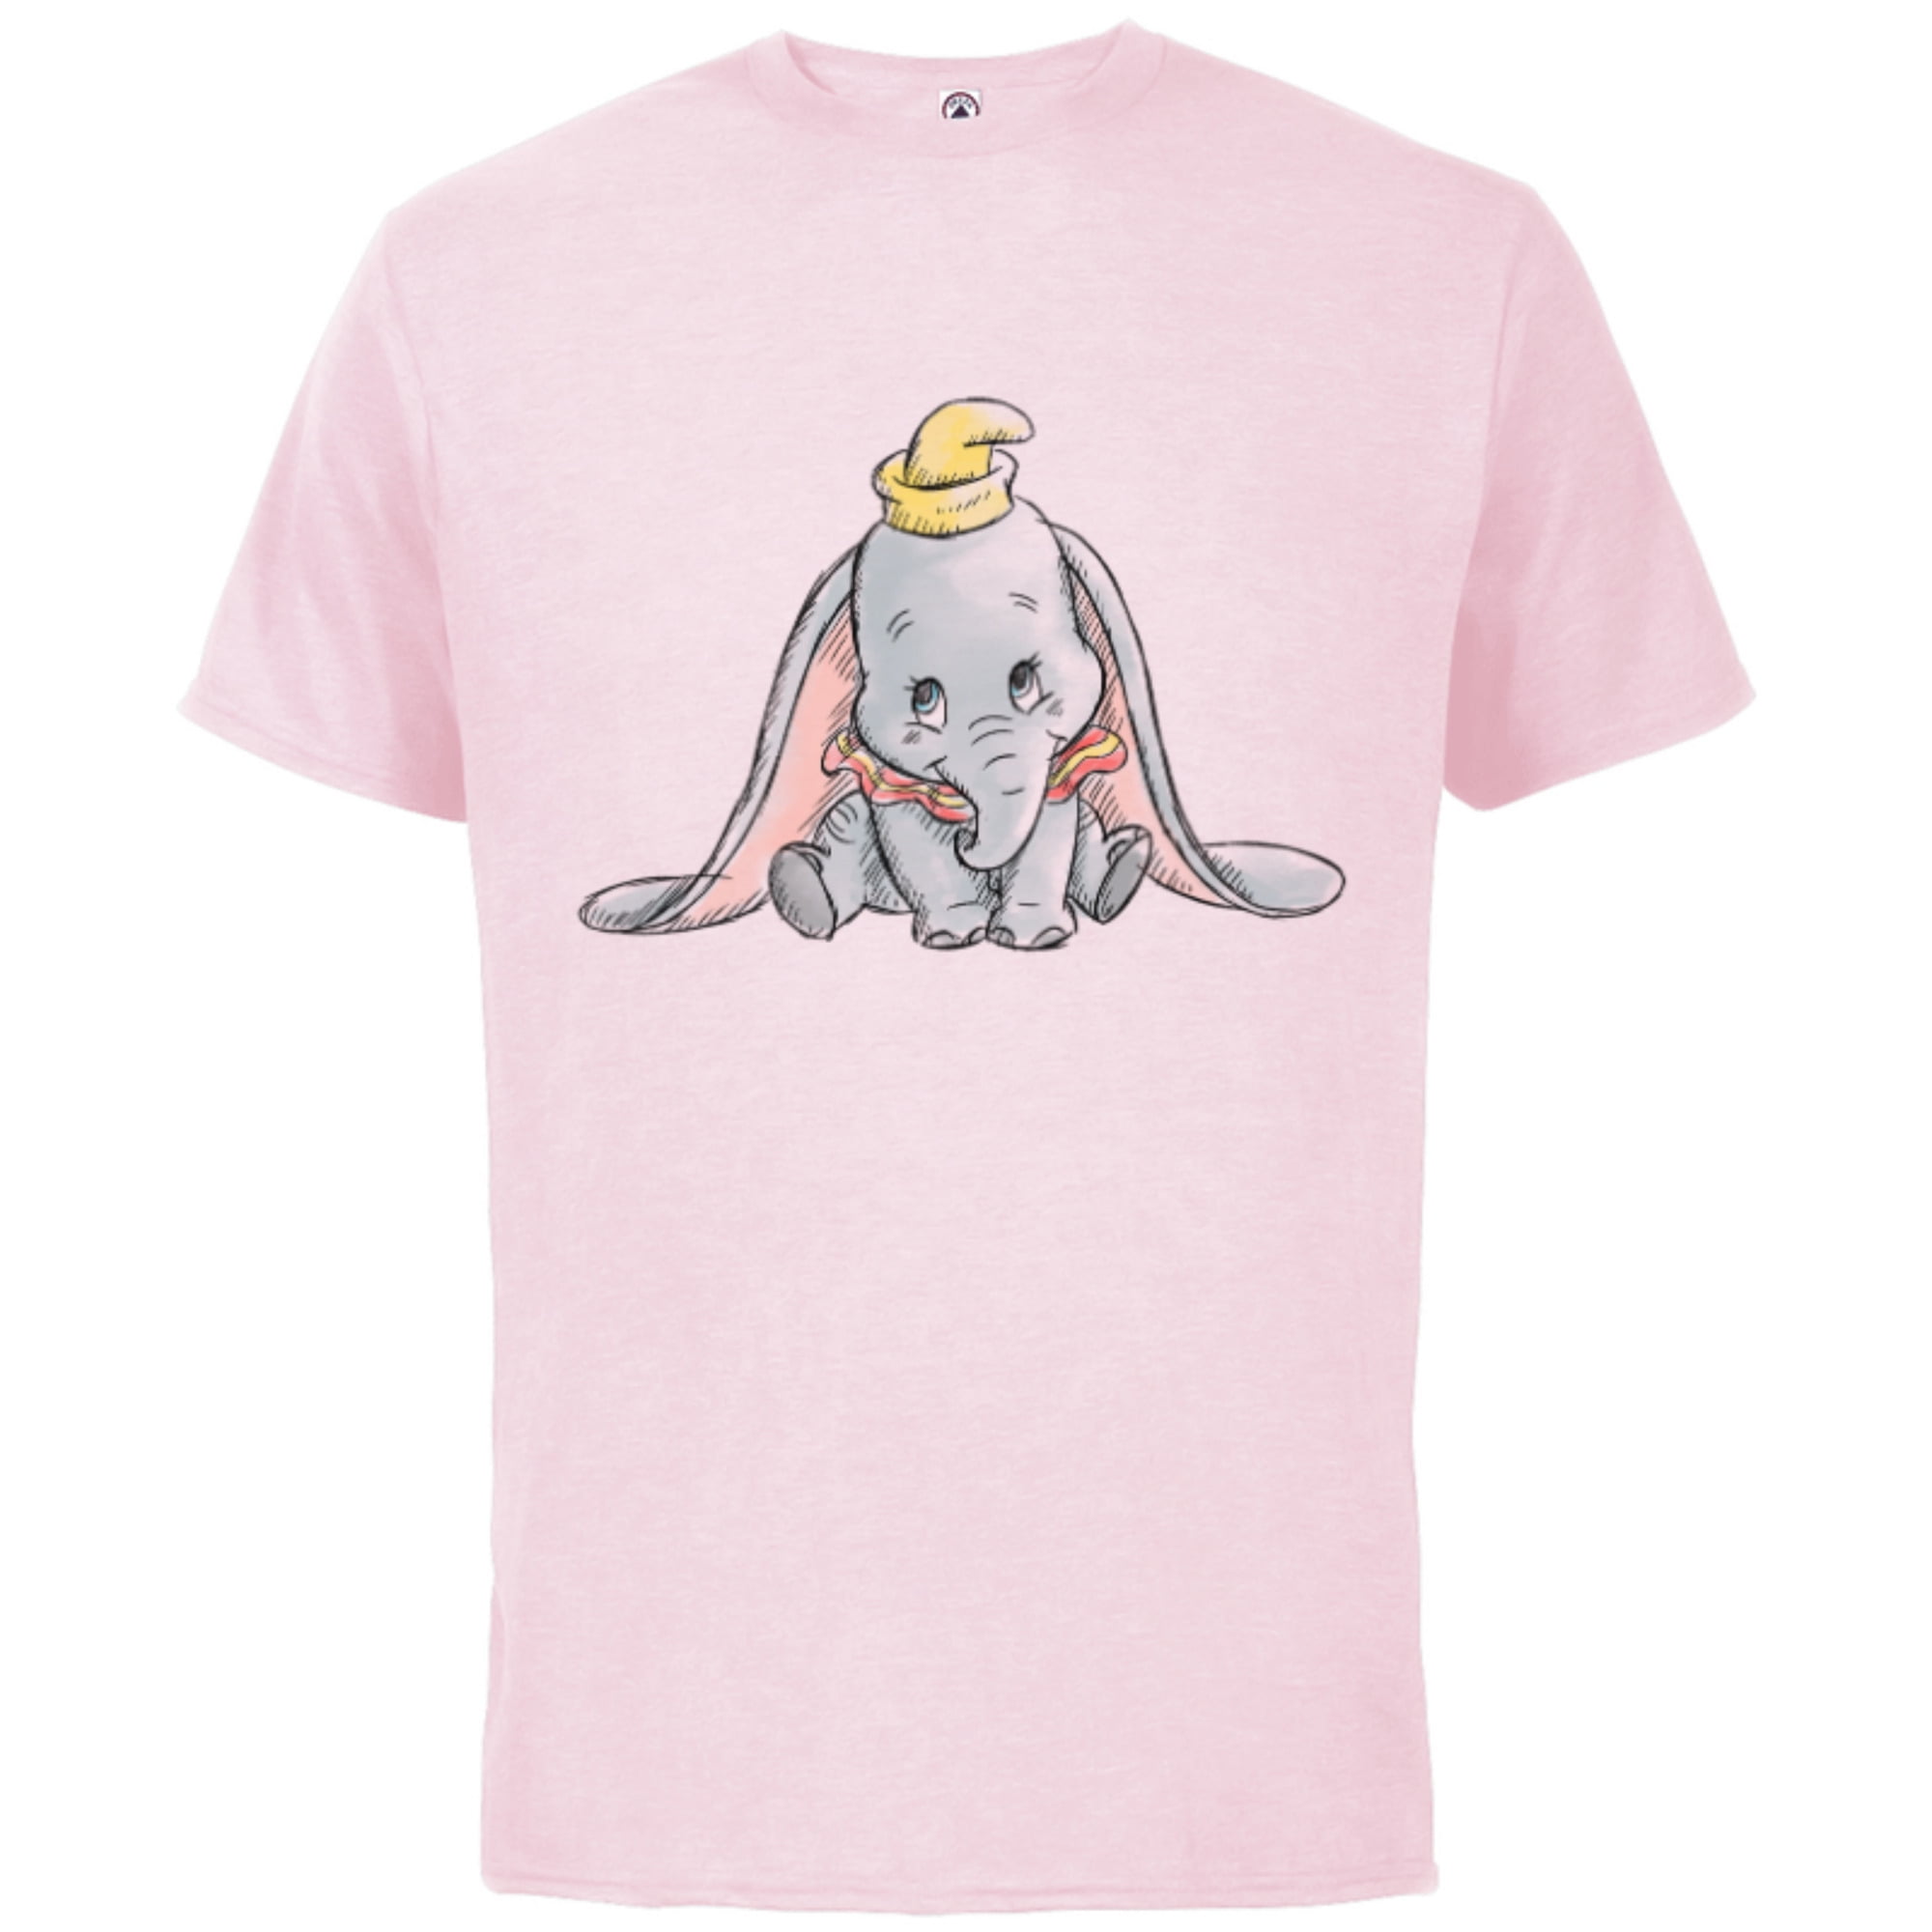 Adults - Dumbo Cotton Sleeve Baby Disney - Short Customized-White Classic Elephant for T-Shirt